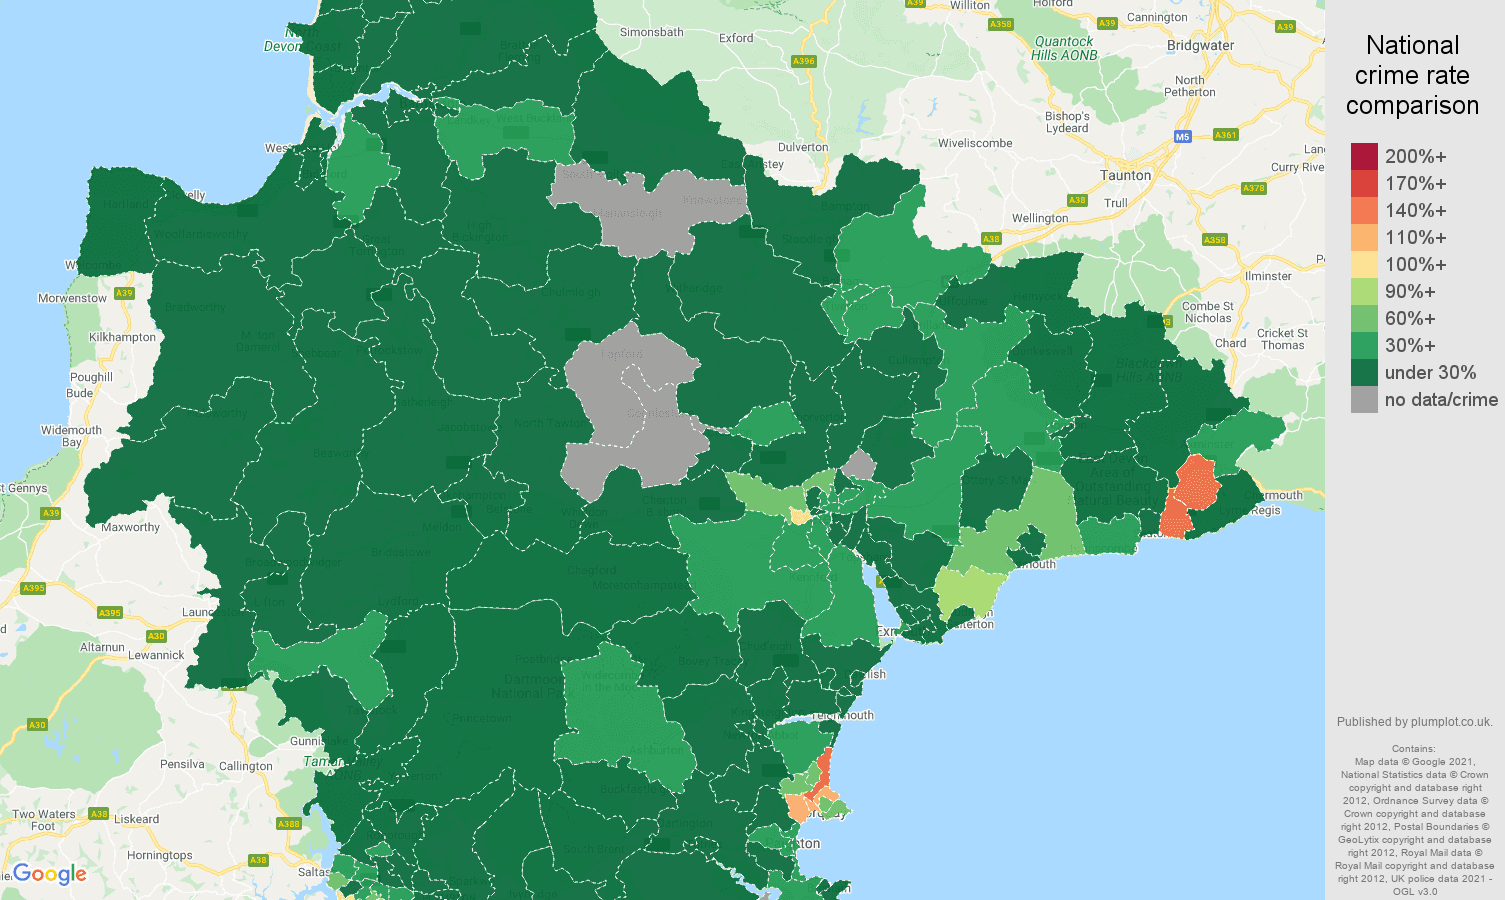 Devon vehicle crime rate comparison map